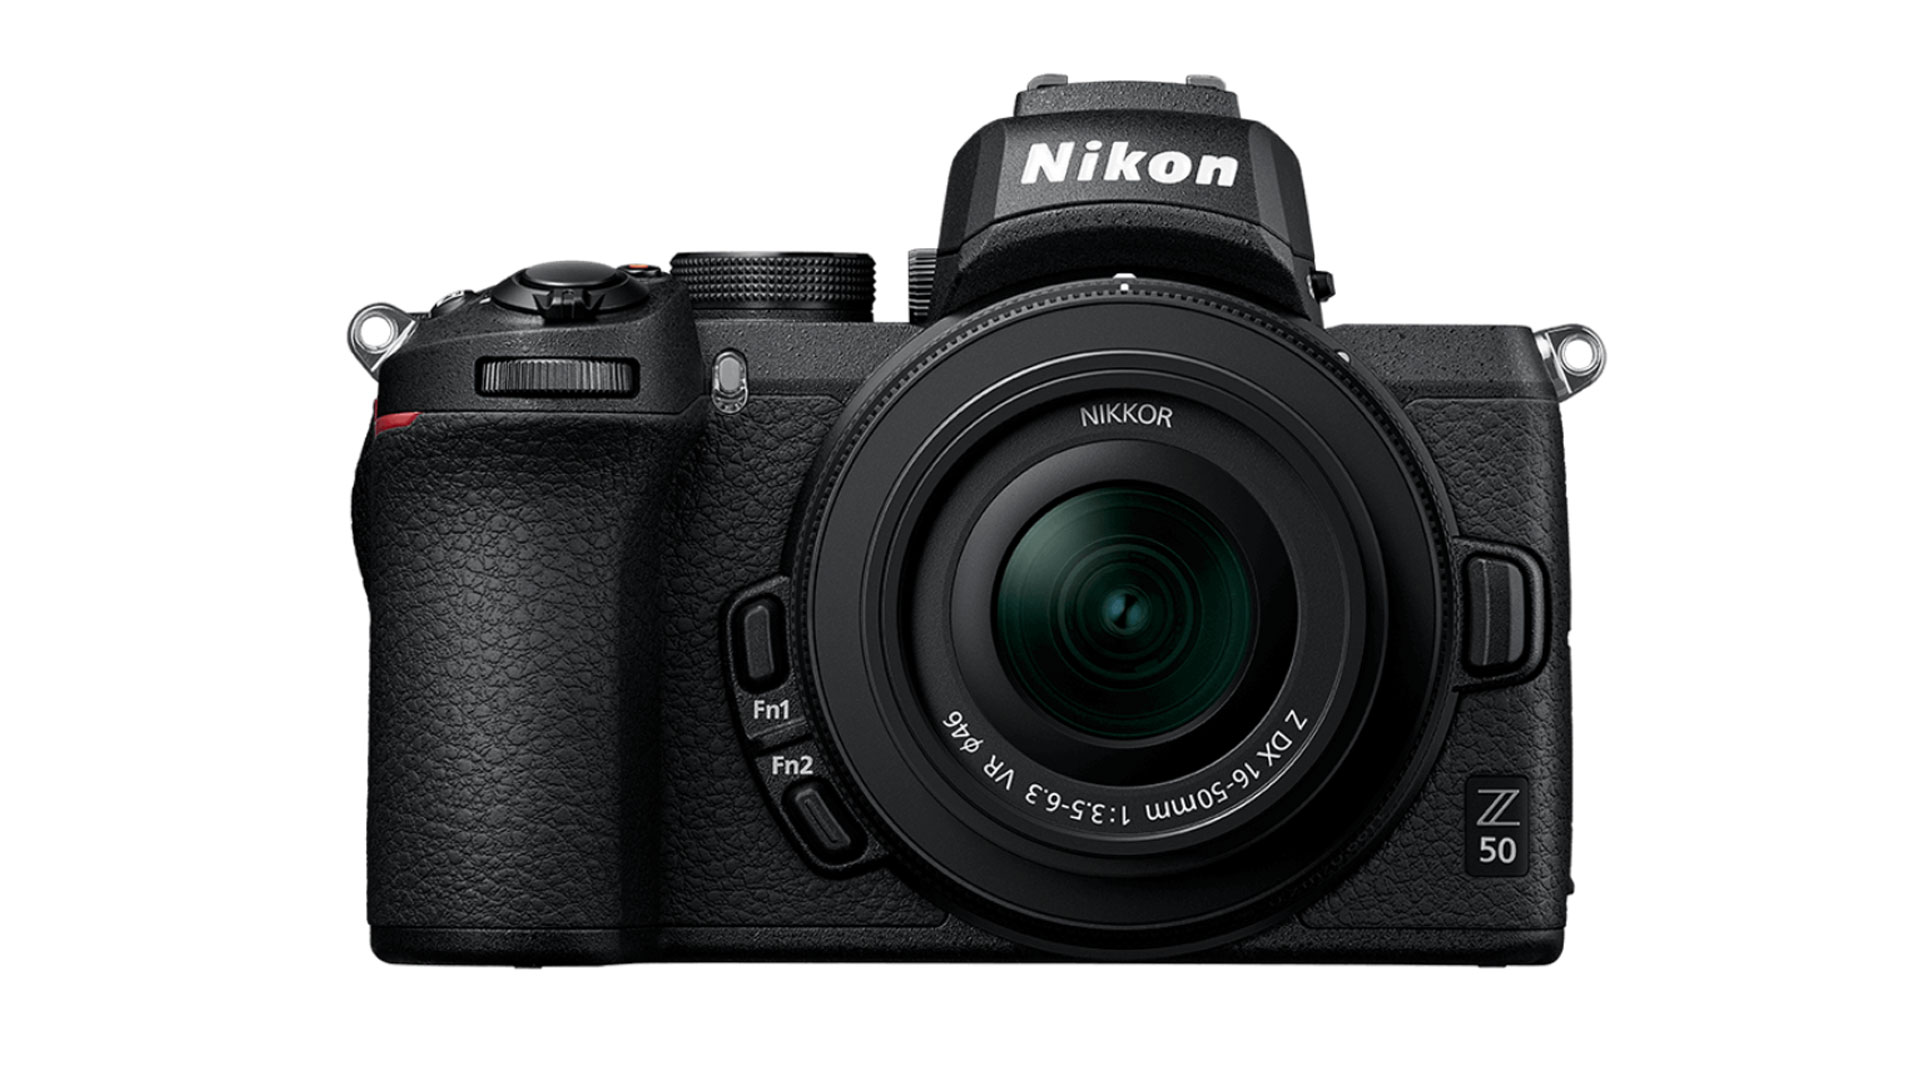 The Nikon Z 50 mirrorless camera